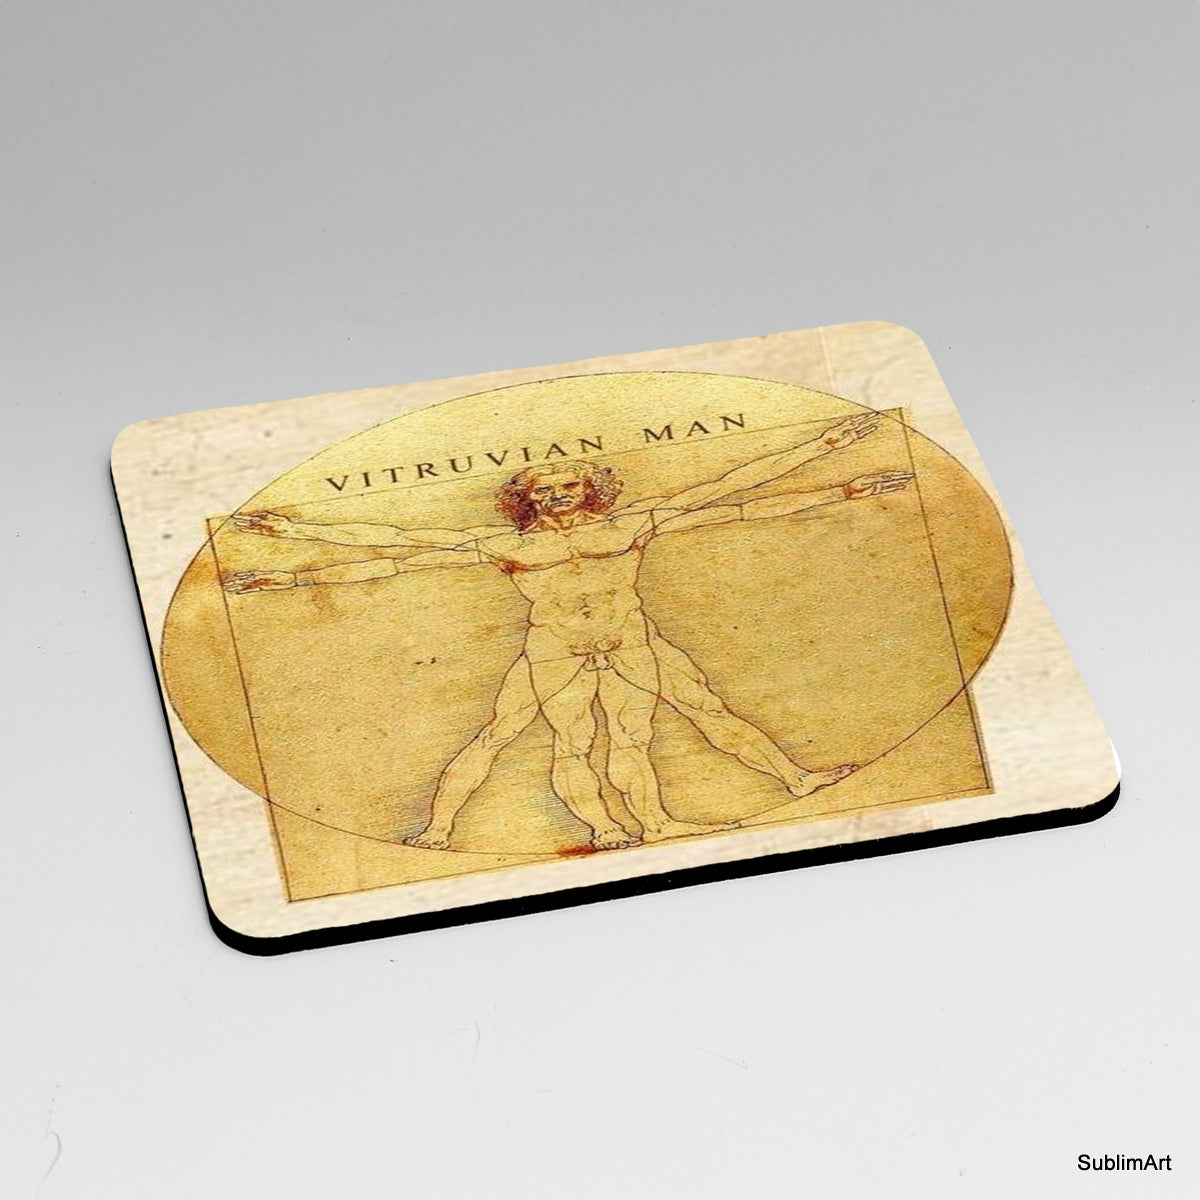 MOUSE PAD: Vitruvian Man Drawing by Leonardo da Vinci